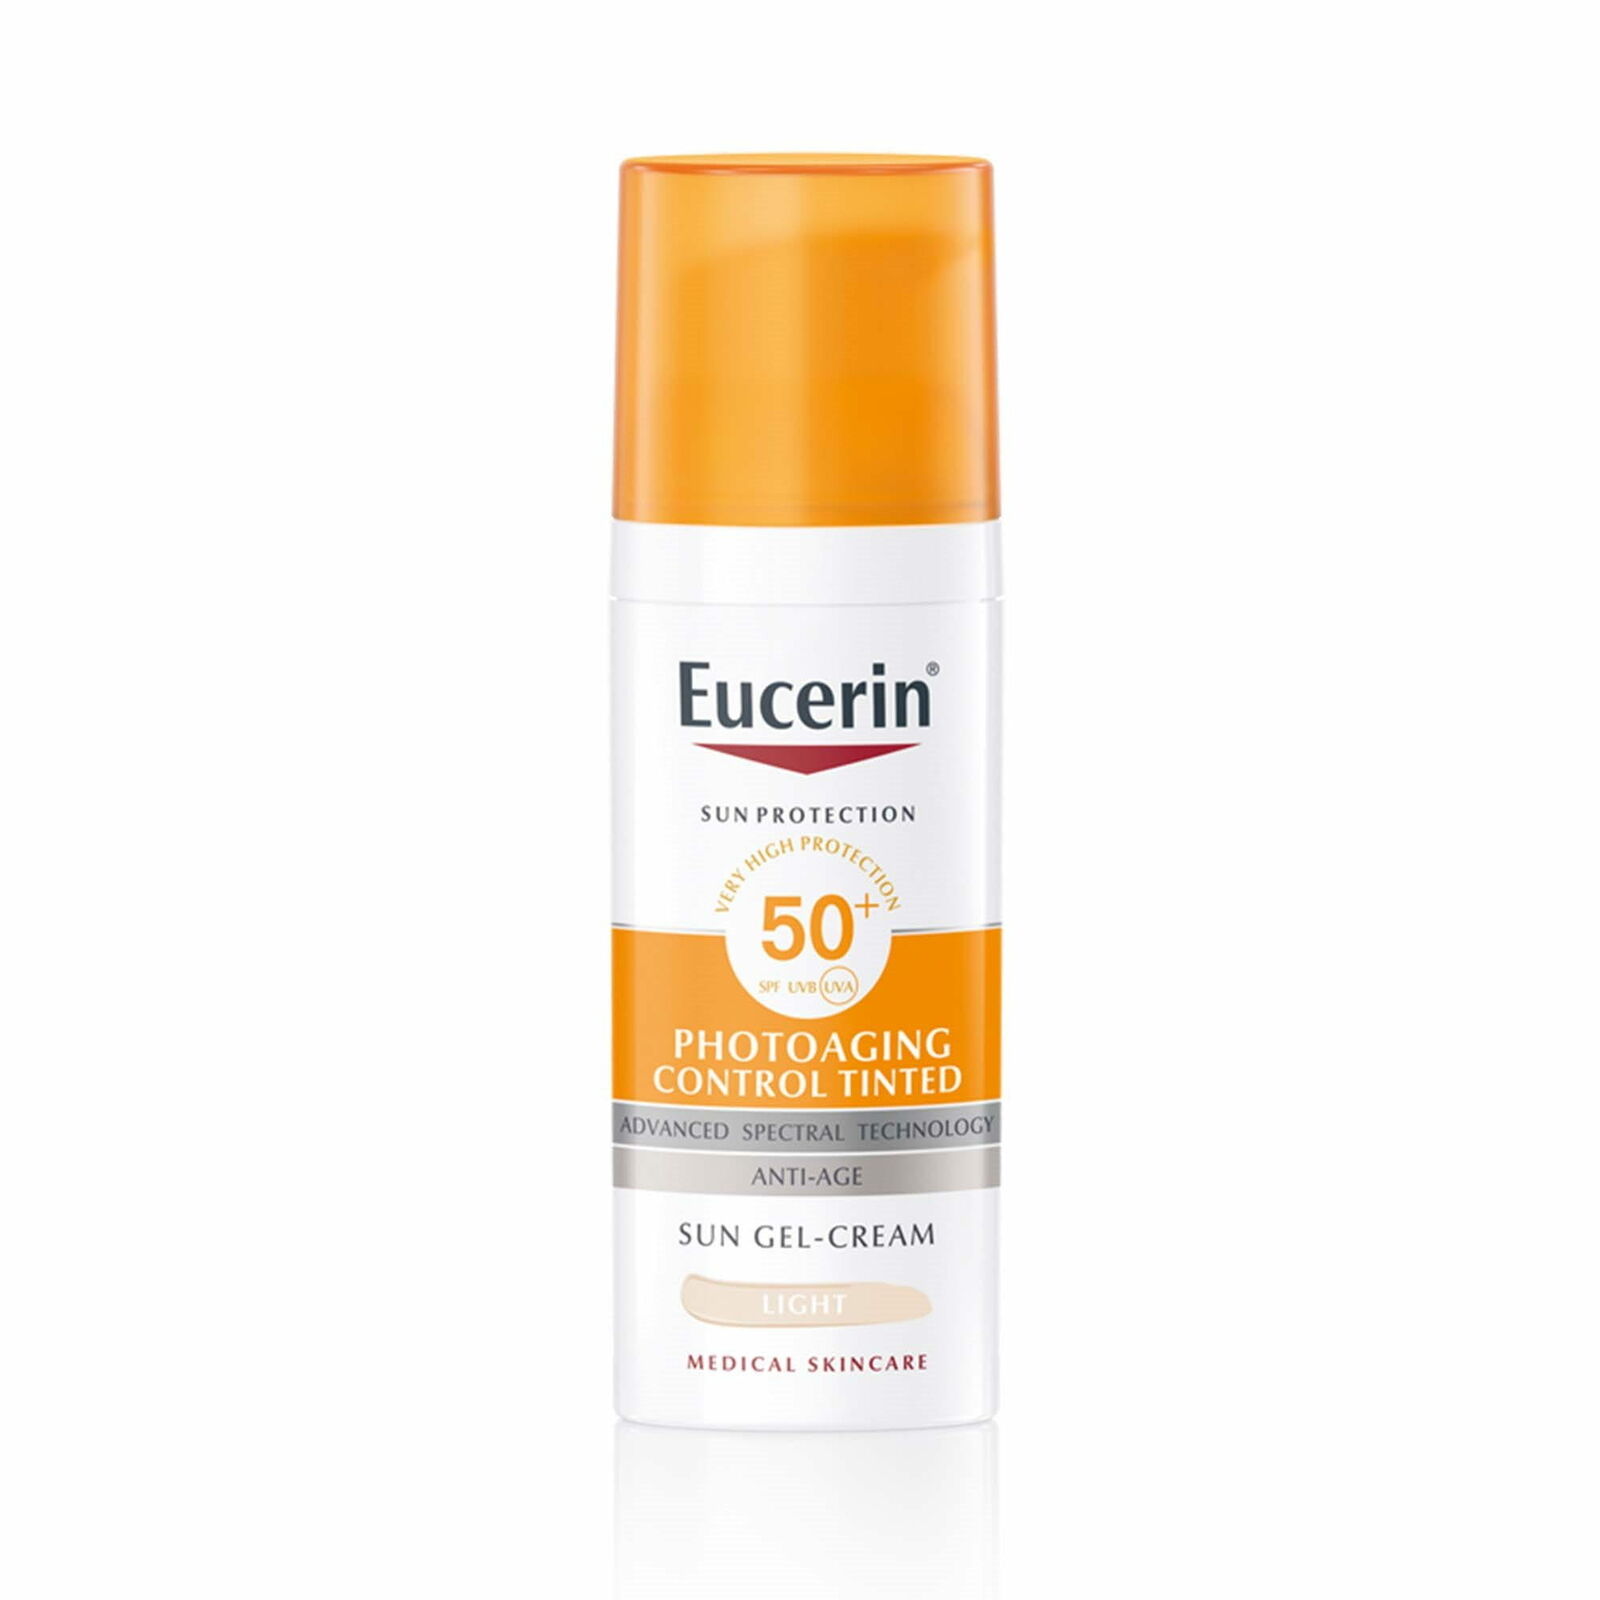 logik industrialisere Ru Eucerin Sun Oil Control tinted gel-cream SPF50 + light 50ml | eBay